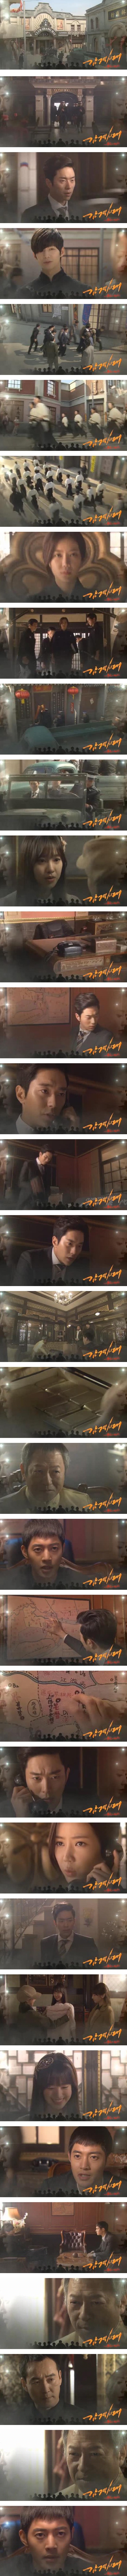 episode 22 captures for the Korean drama 'Inspiring Generation'